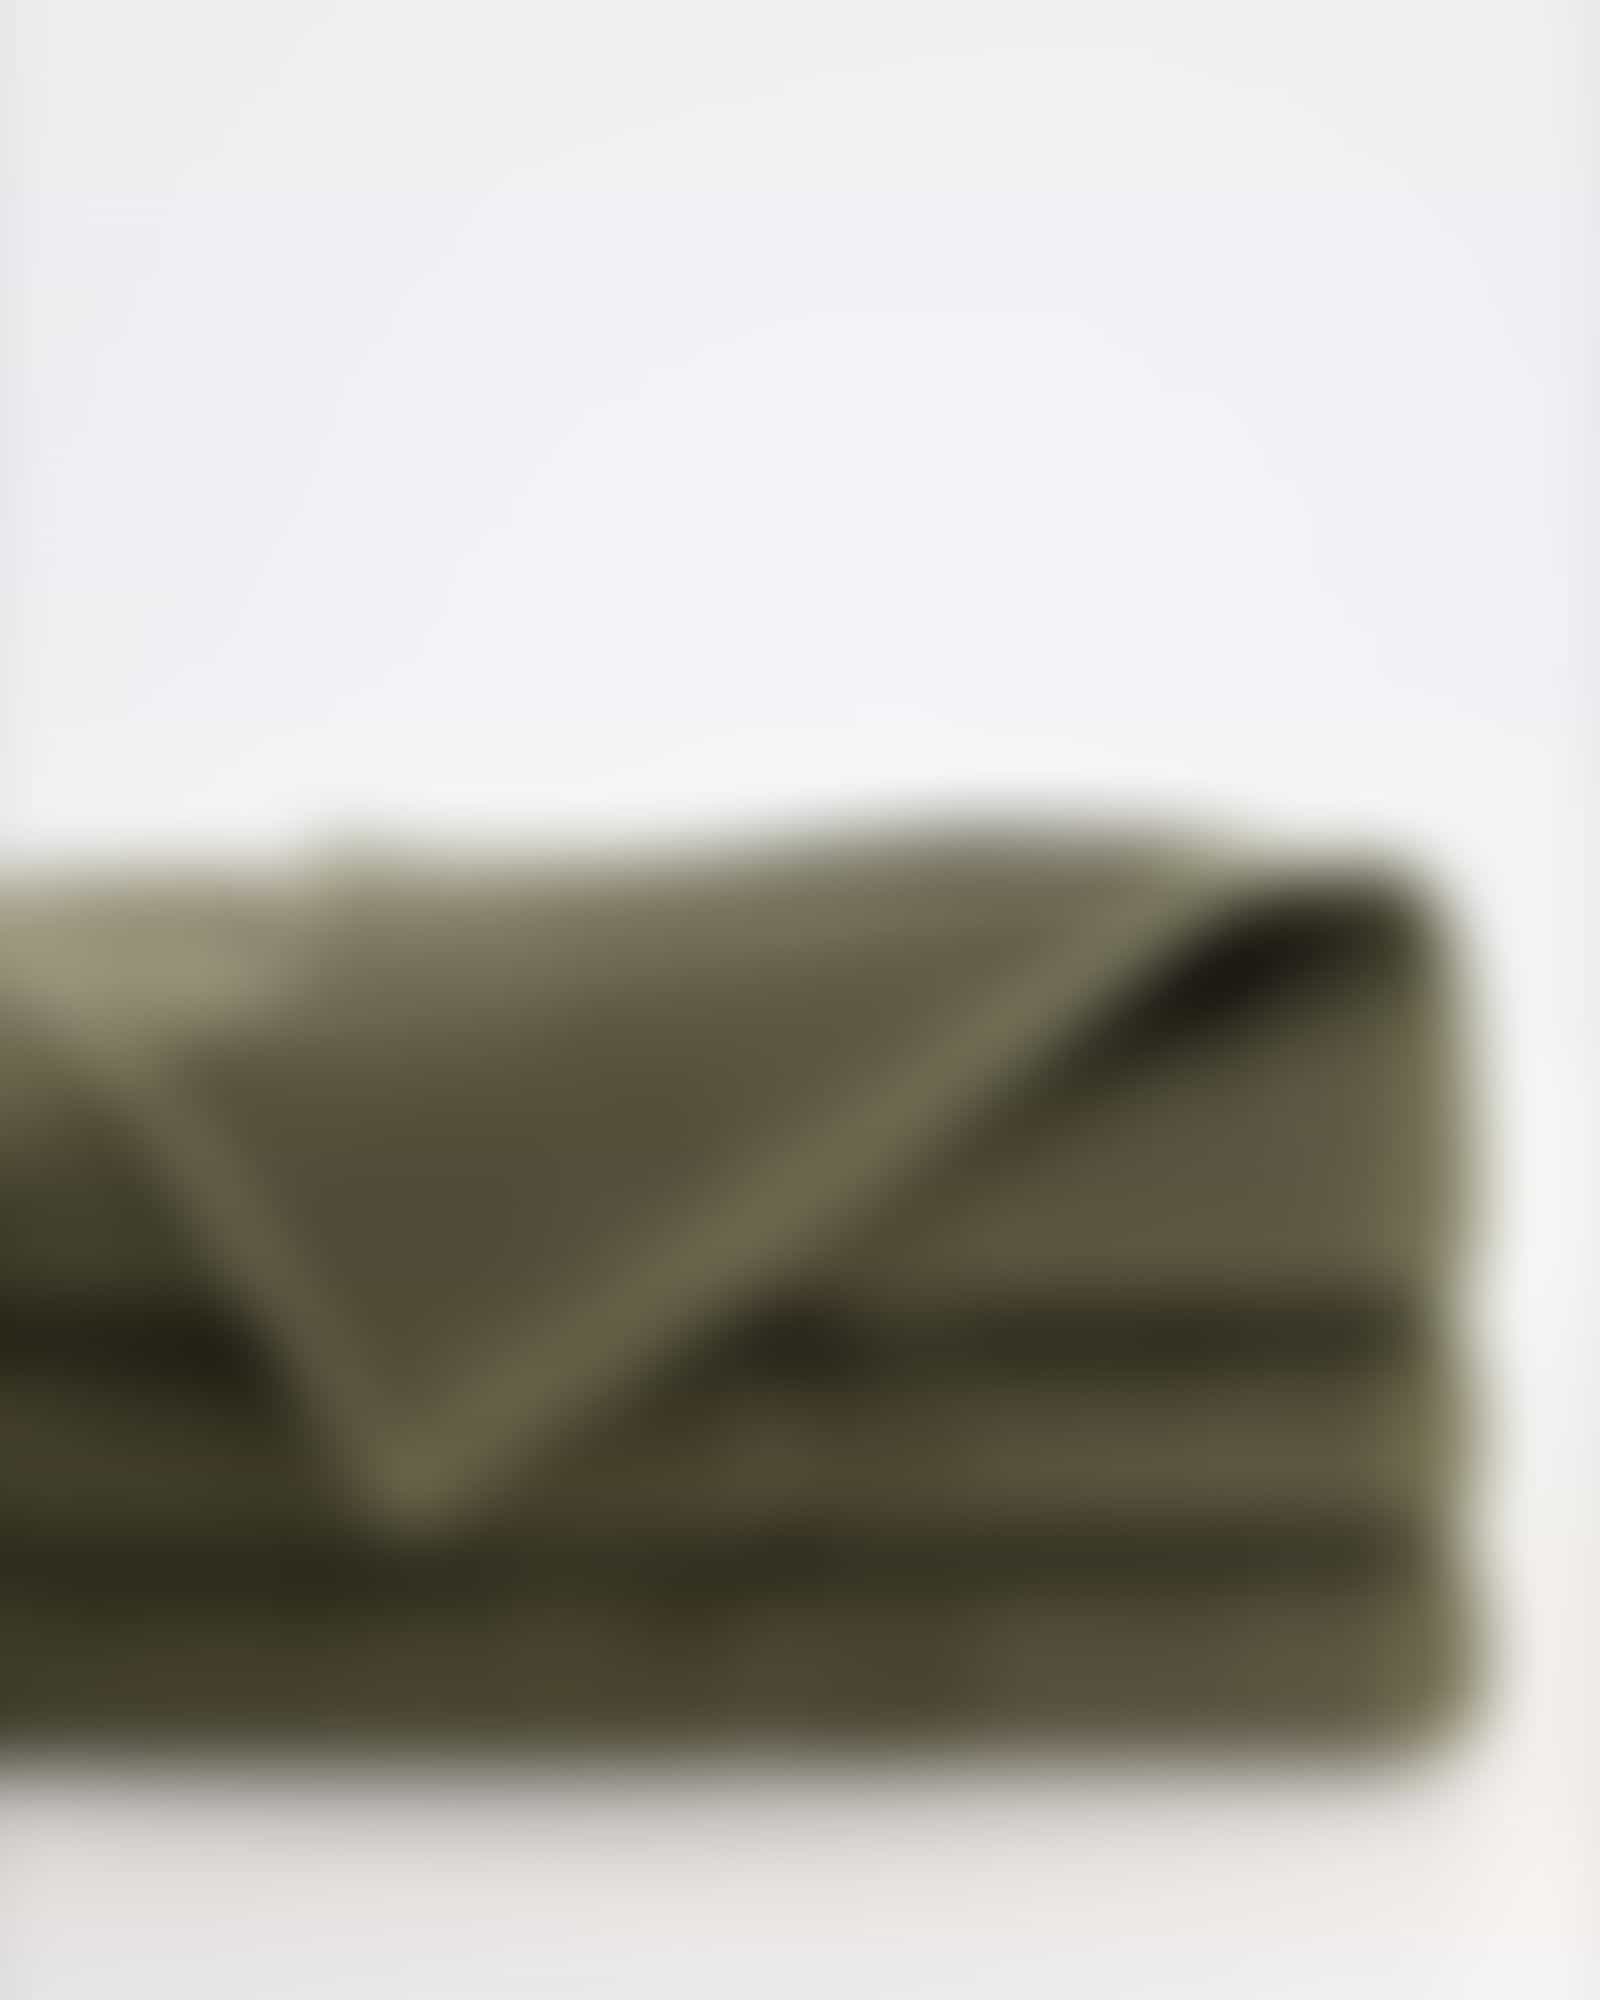 Möve Handtücher Wellbeing Perlstruktur - Farbe: sea grass - 677 - Waschhandschuh 15x20 cm Detailbild 2